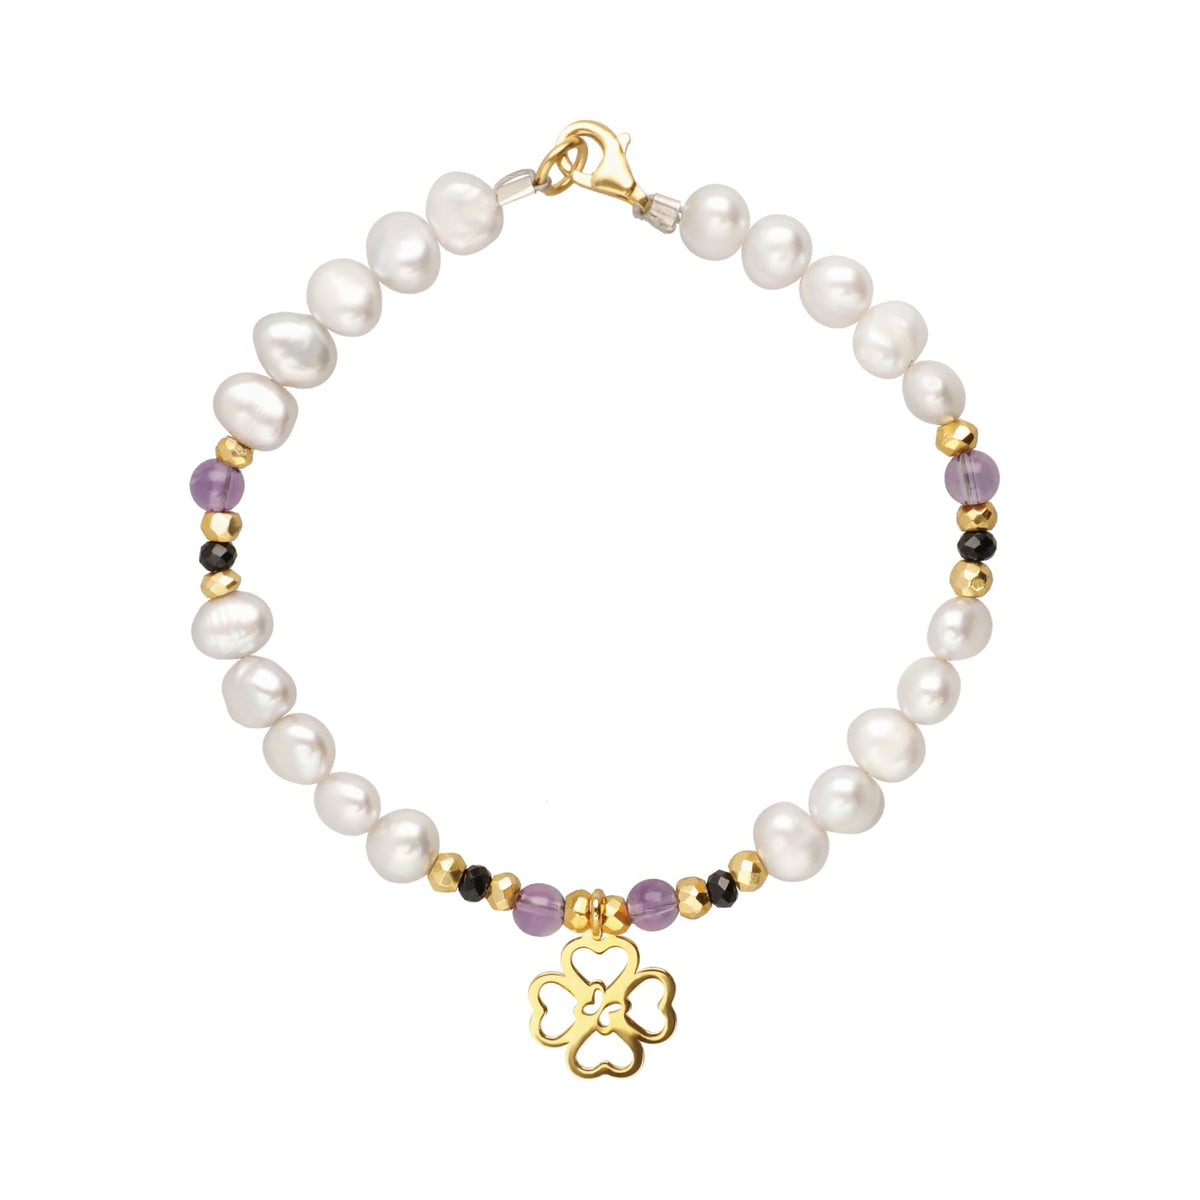 Bracelet 925 Silver Women Carisma Clover Gold Amethyst / Pearls Gris Spinel